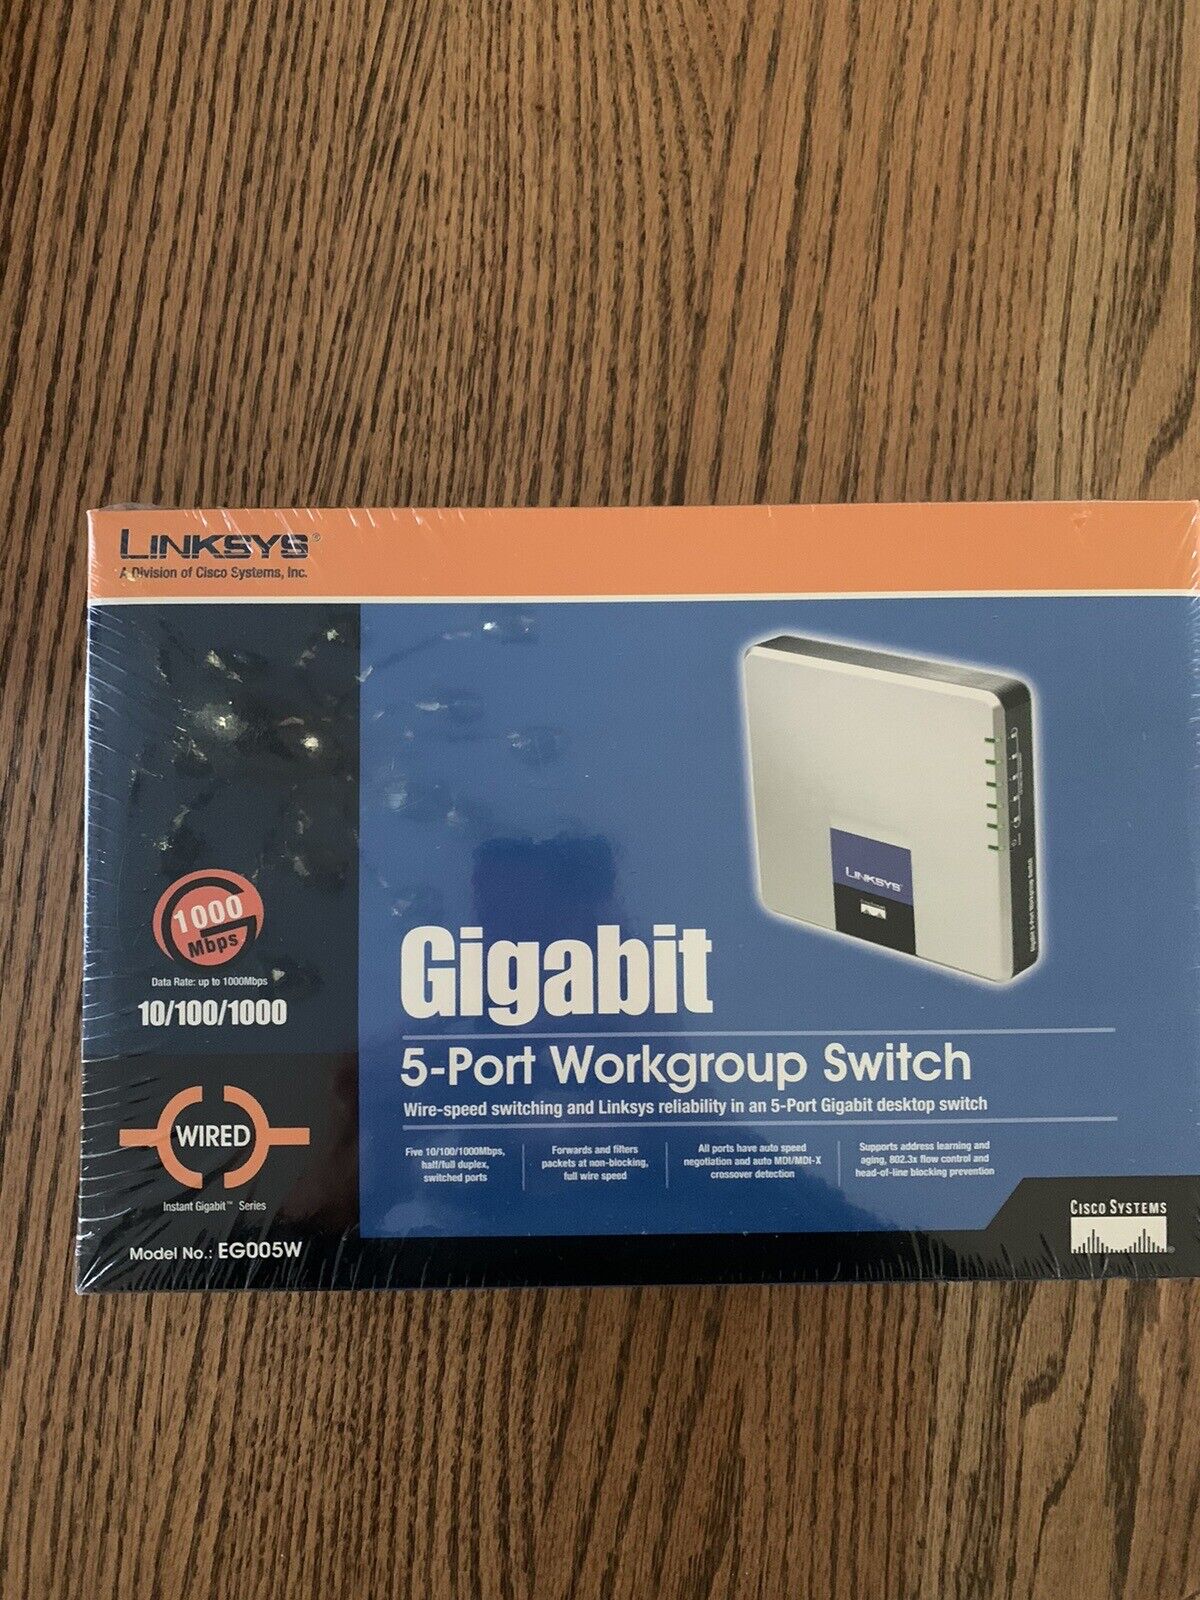 Linksys  gigabit 5-port workgroup switch, model EG005W